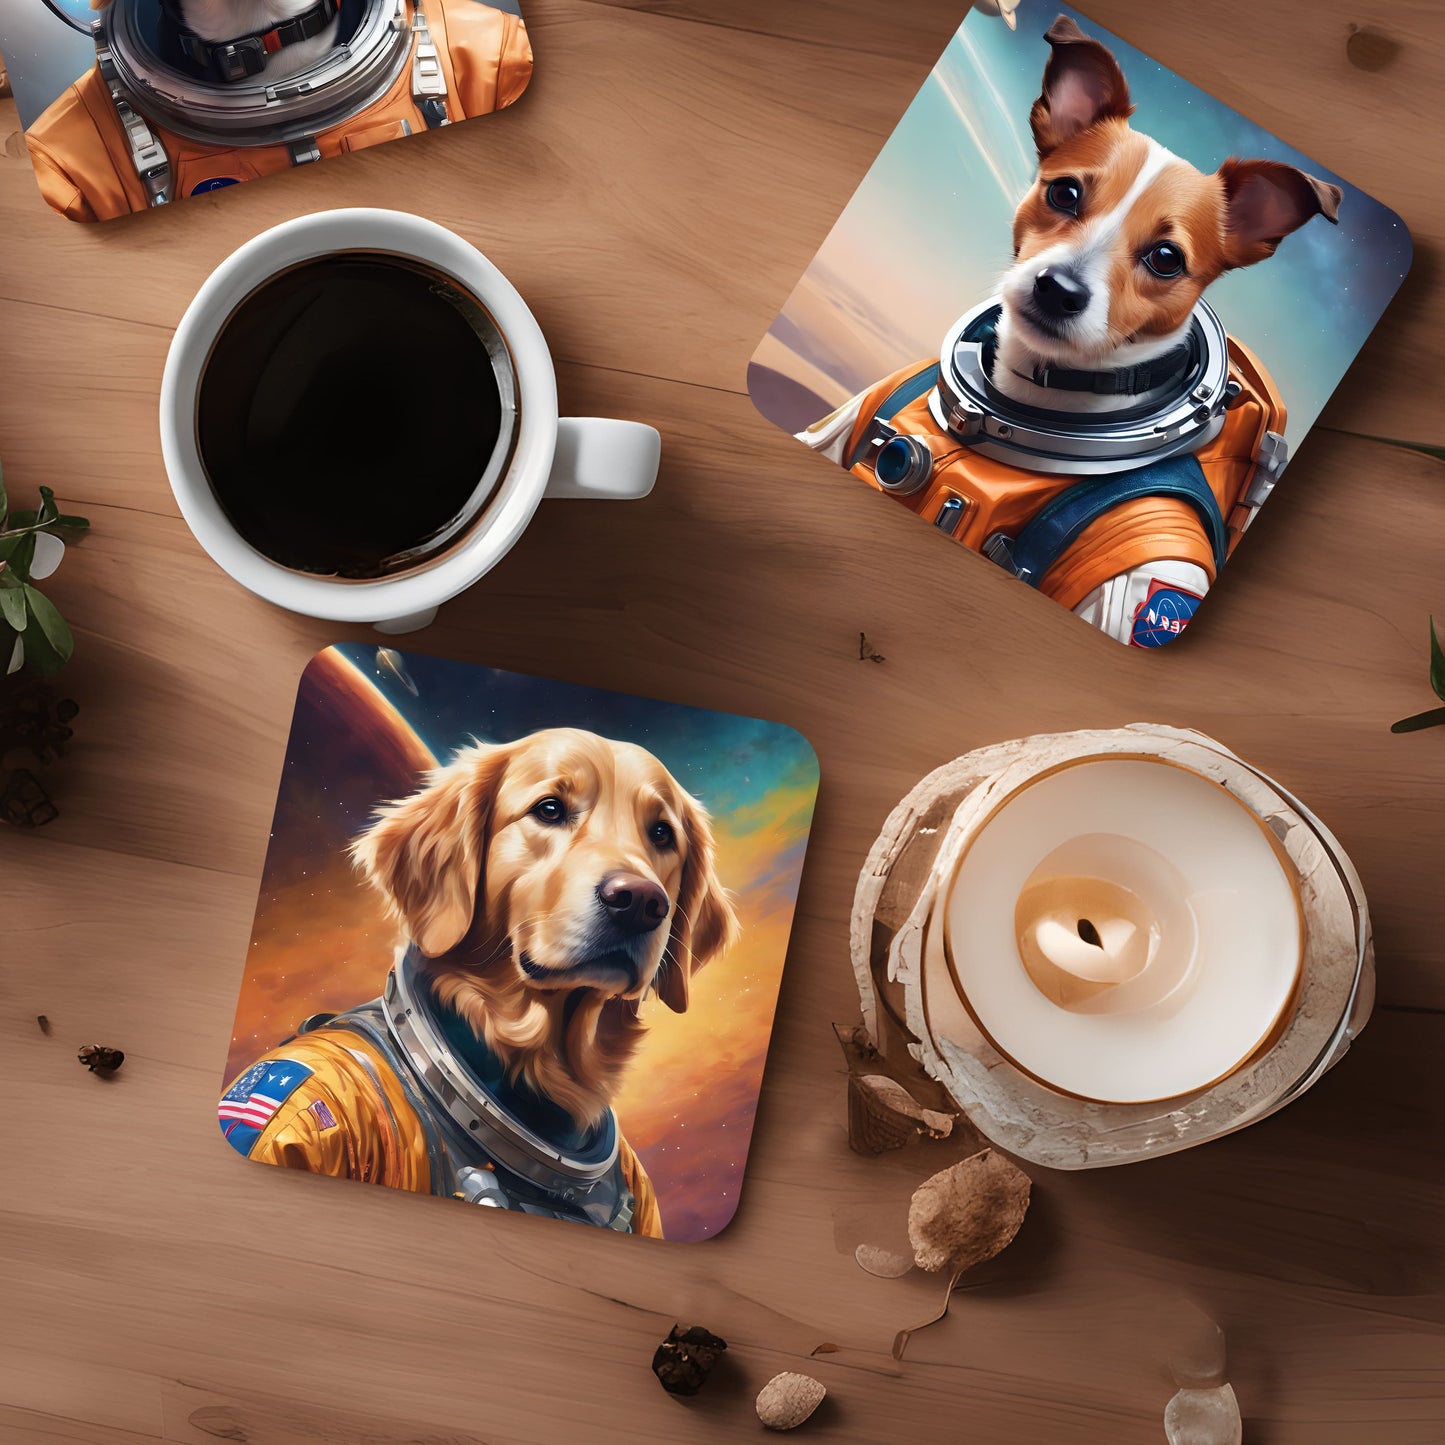 Dog Astronaut Space Art 4 x Coaster Set